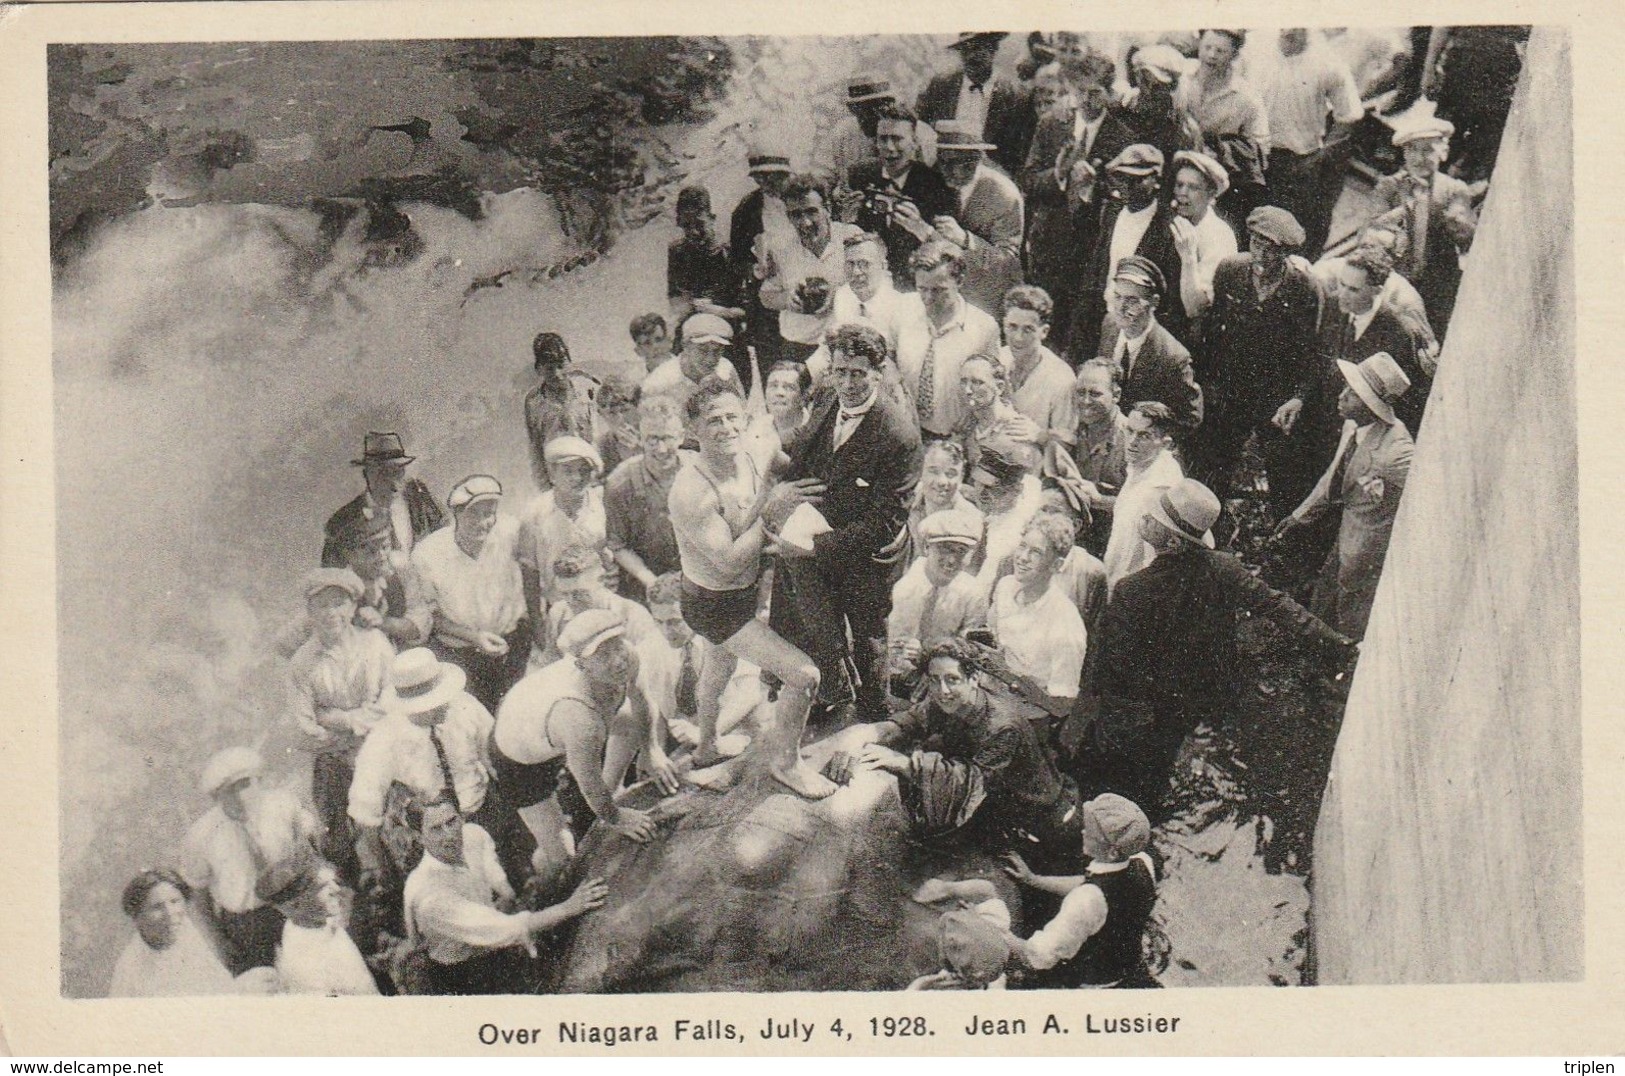 Over Niagara Falls, July 4, 1928 - Jean A. Lussier - Daredevil - High Diving